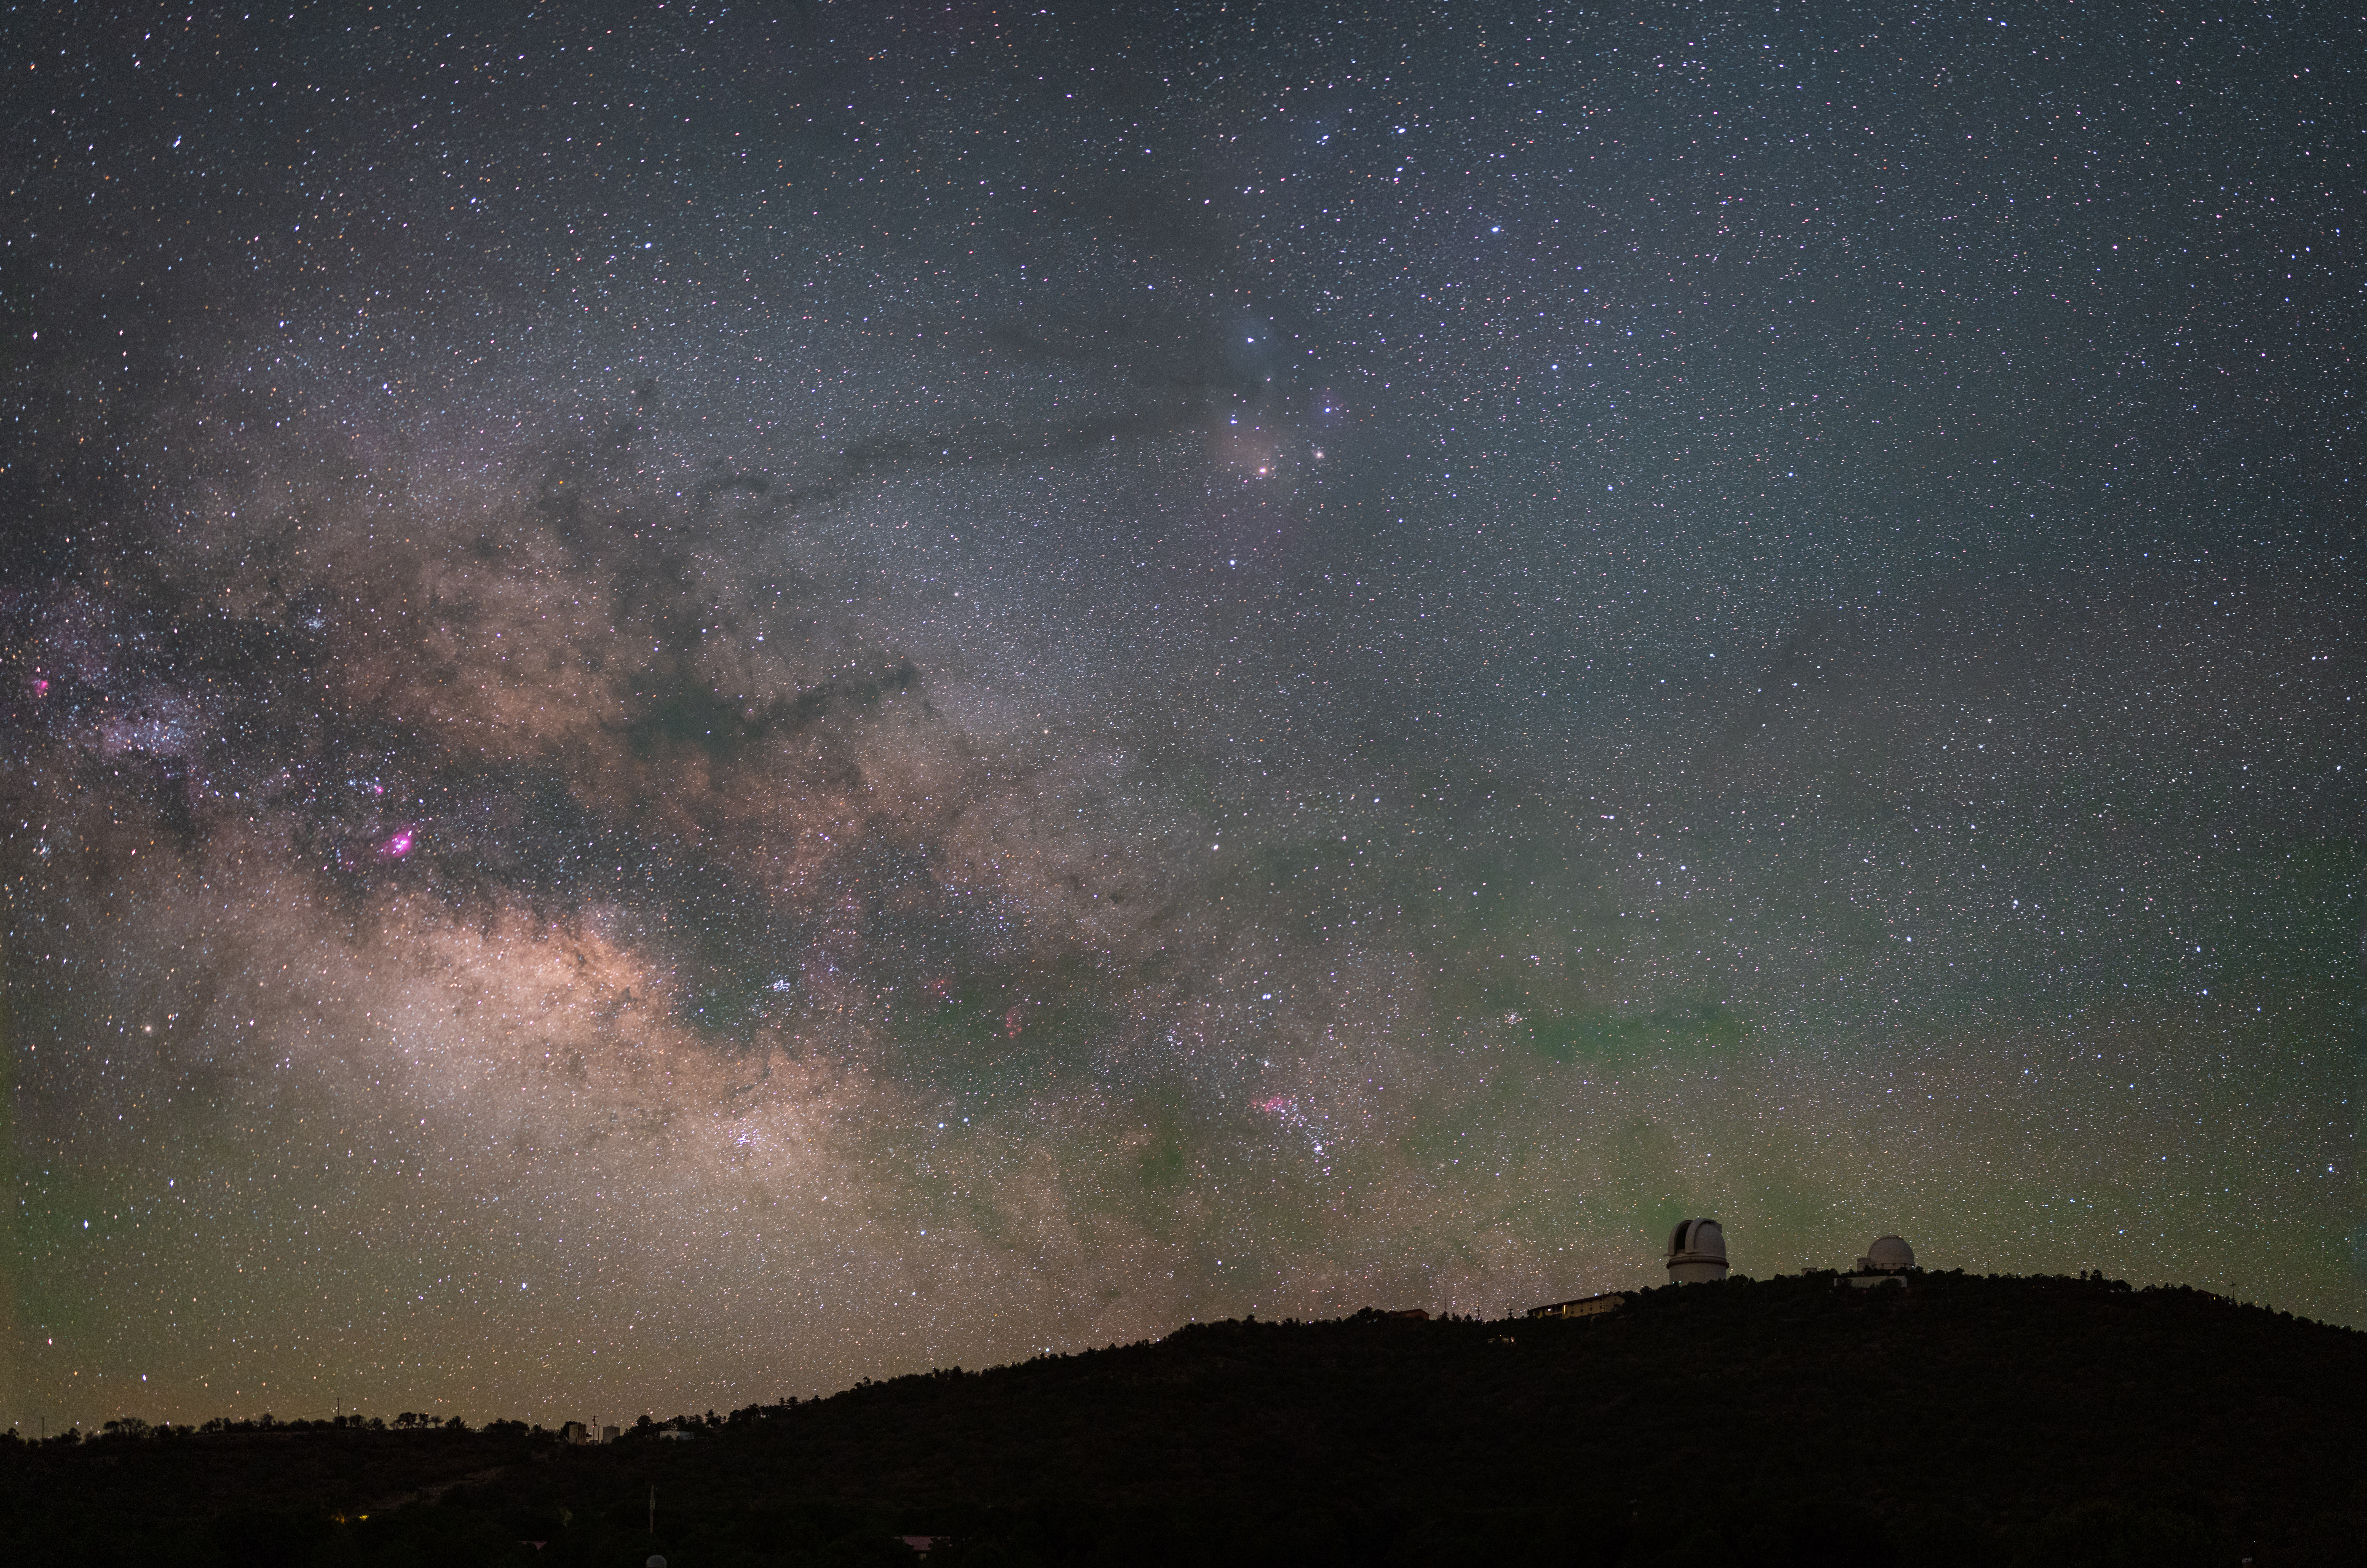 The Milky Way in the night sky is evident over a dark peak, Mt. Locke